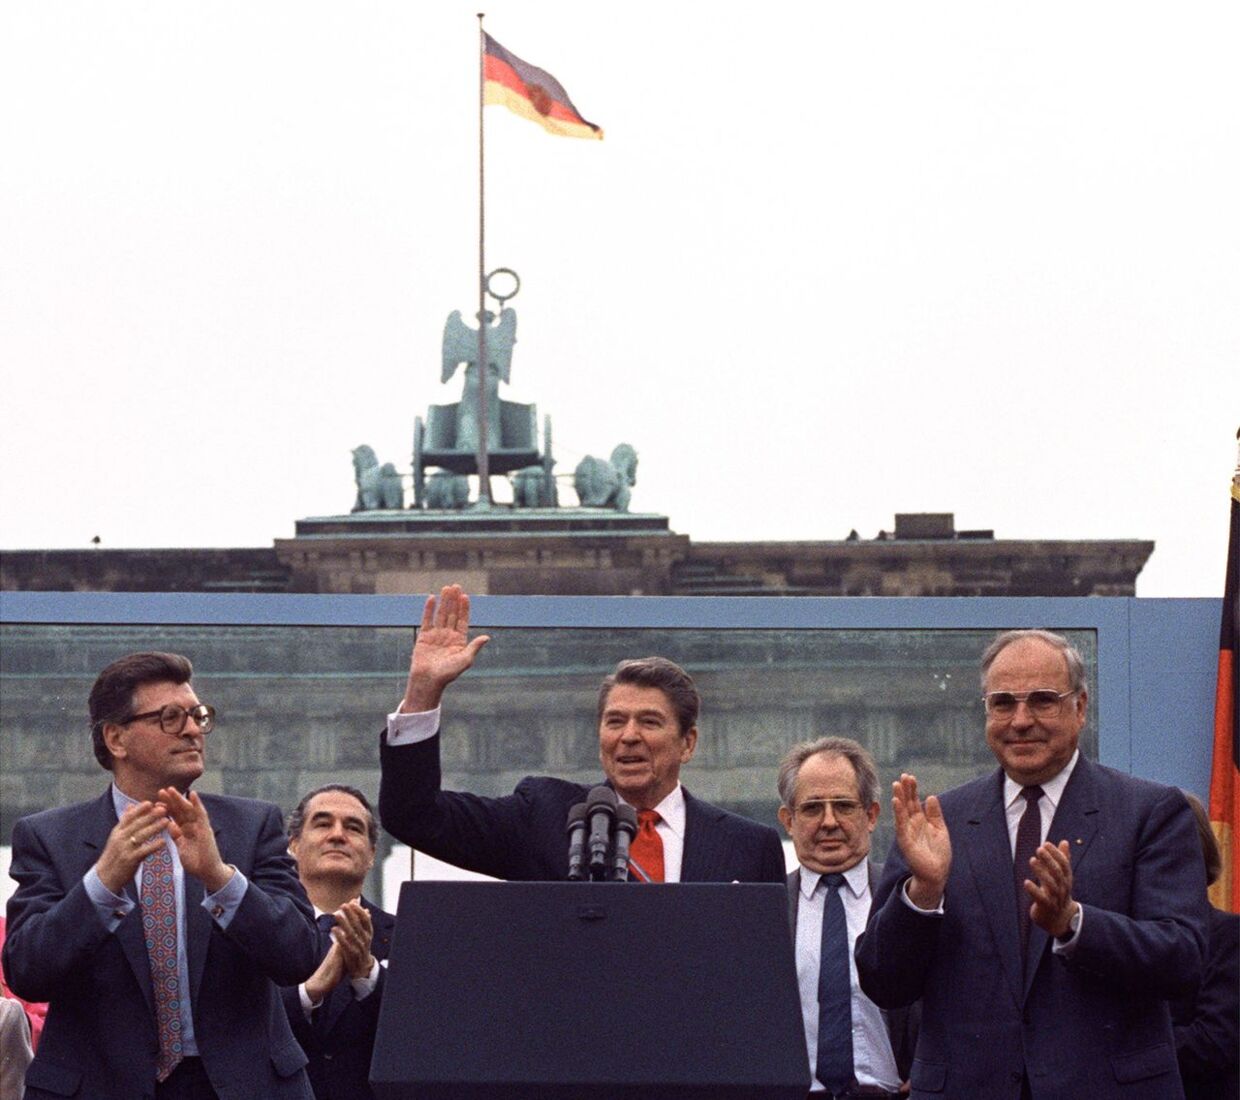 Præsident Ronald Reagan under sin berømte tale i Berlin i 1987.